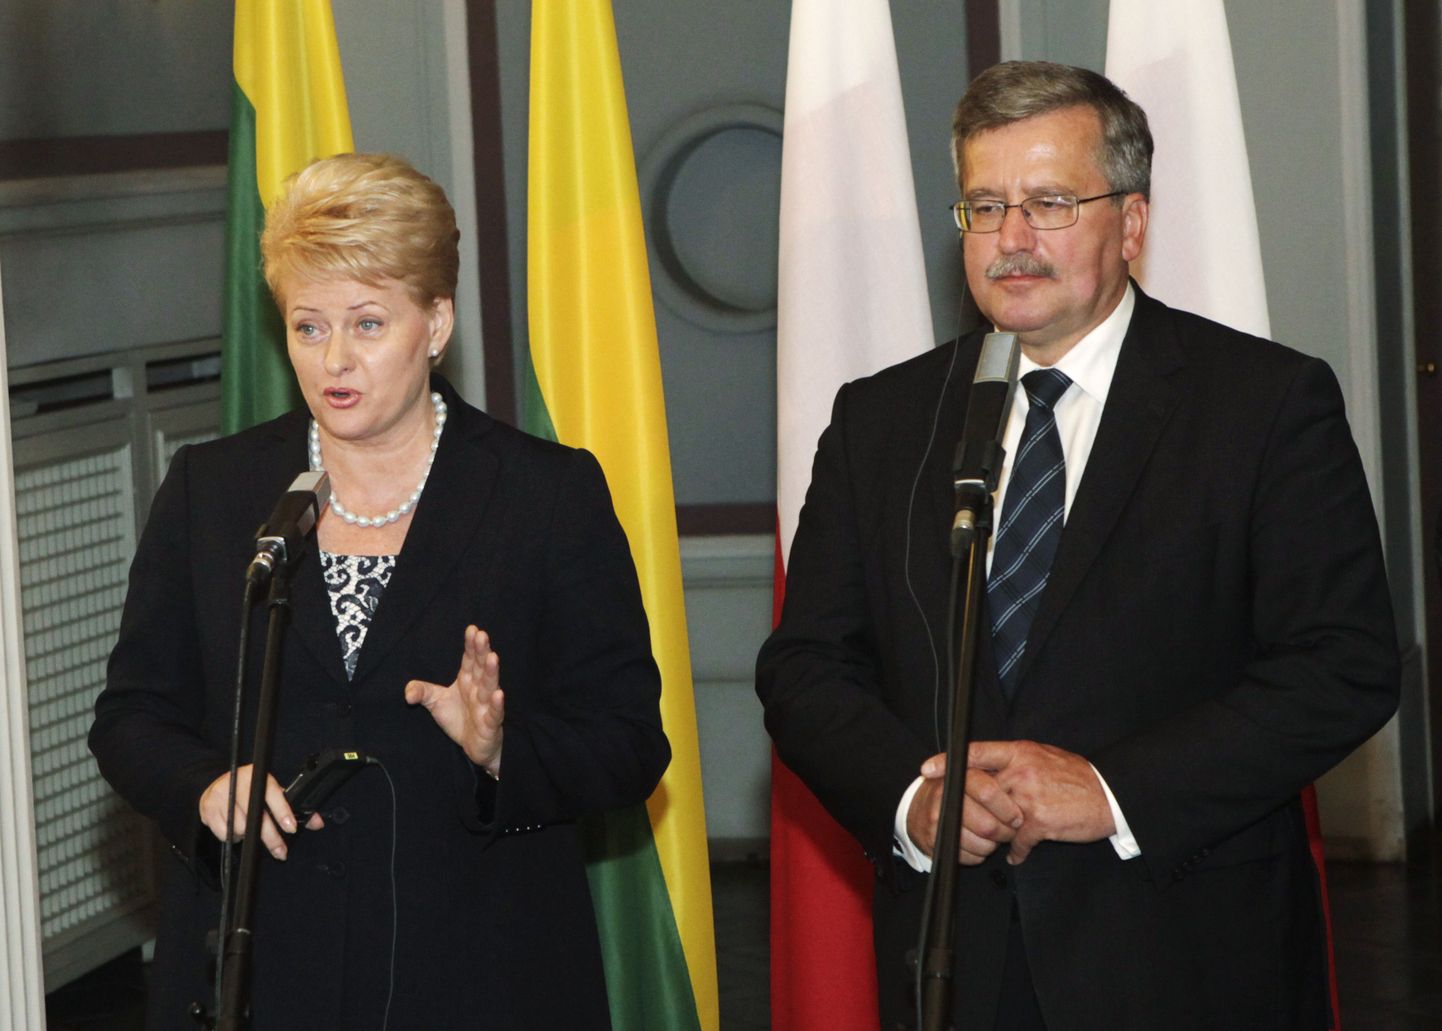 Dalia Grybauskaite ja Bronislaw Komorowski septembris Riias.